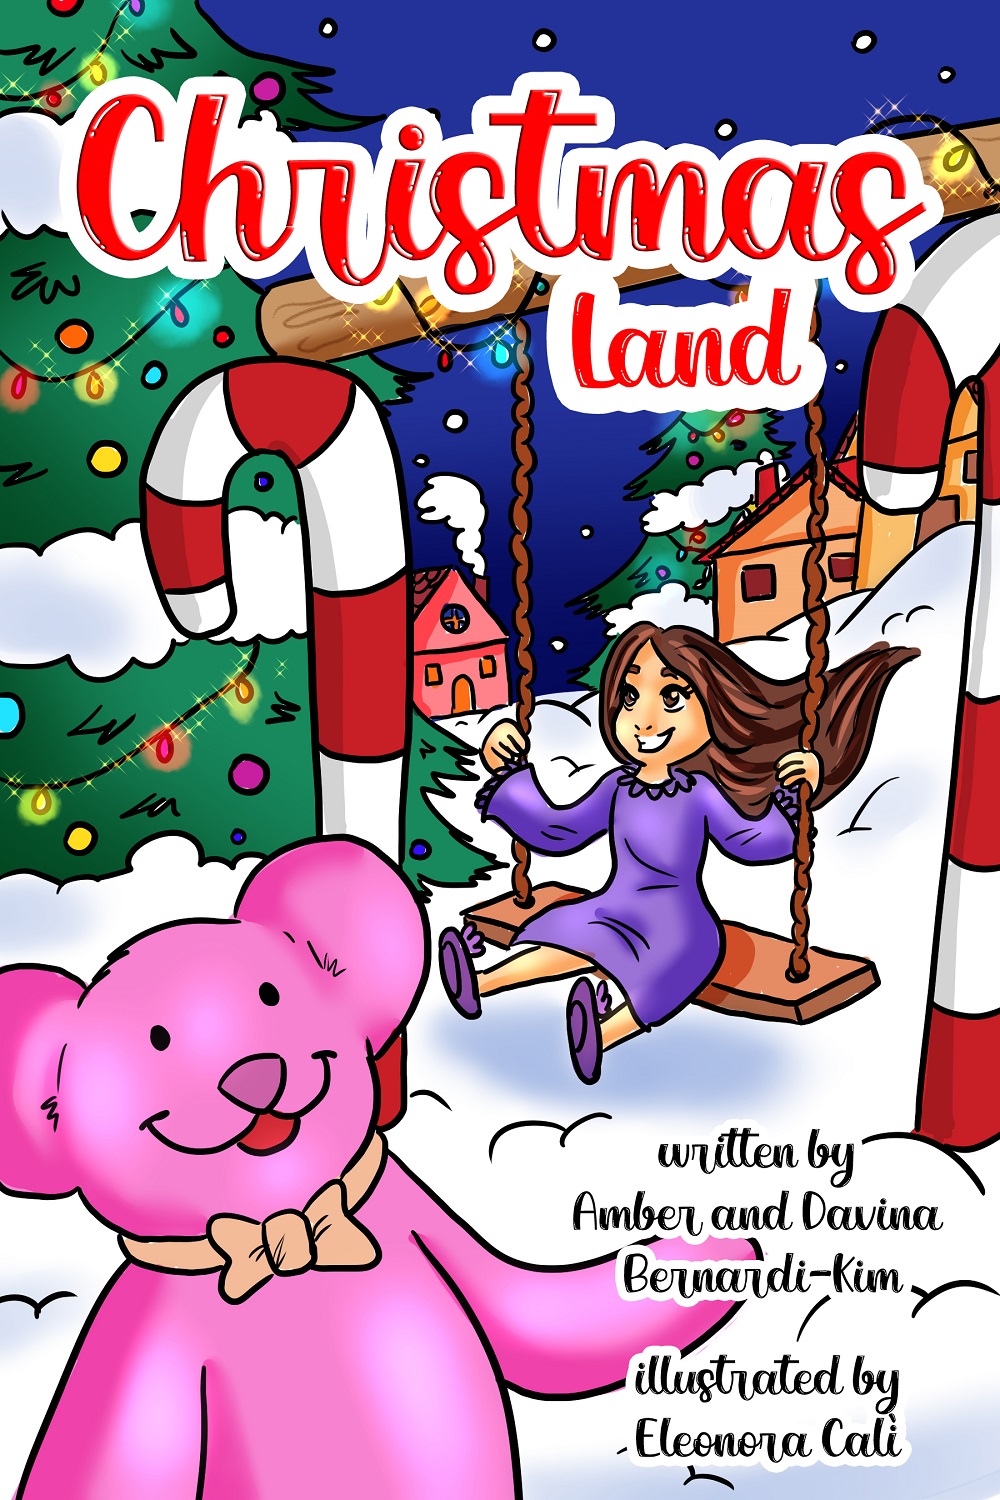 Amber and Davina Bernardi-Kim Release New Children’s Book - Christmas Land